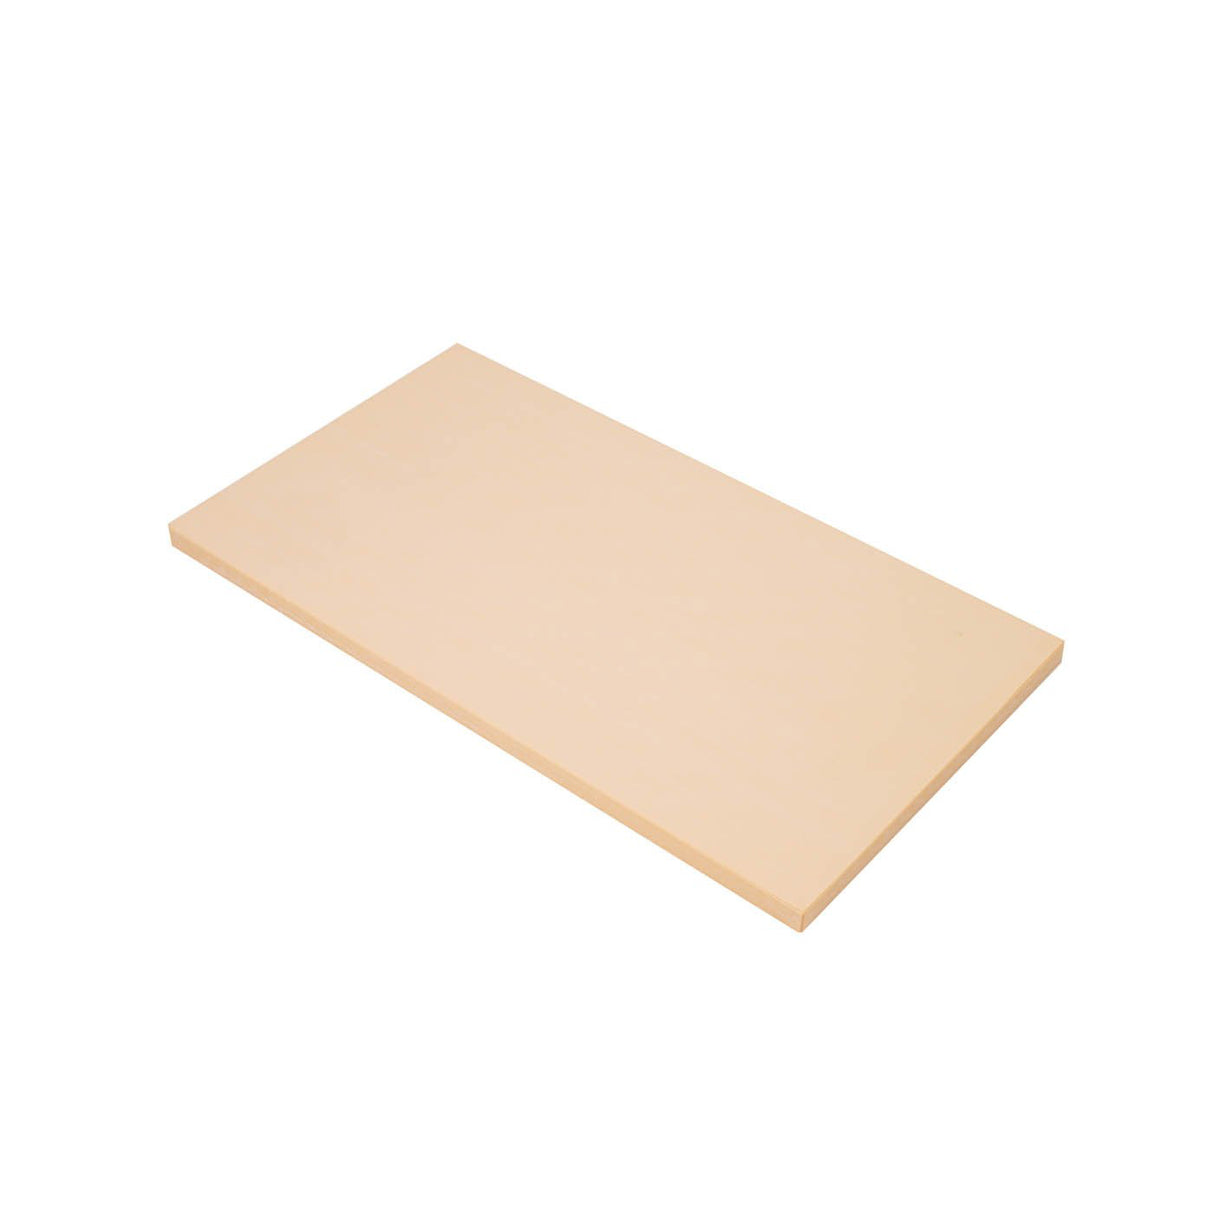 Asahi Professional Antibacterial Rubber Cutting Board